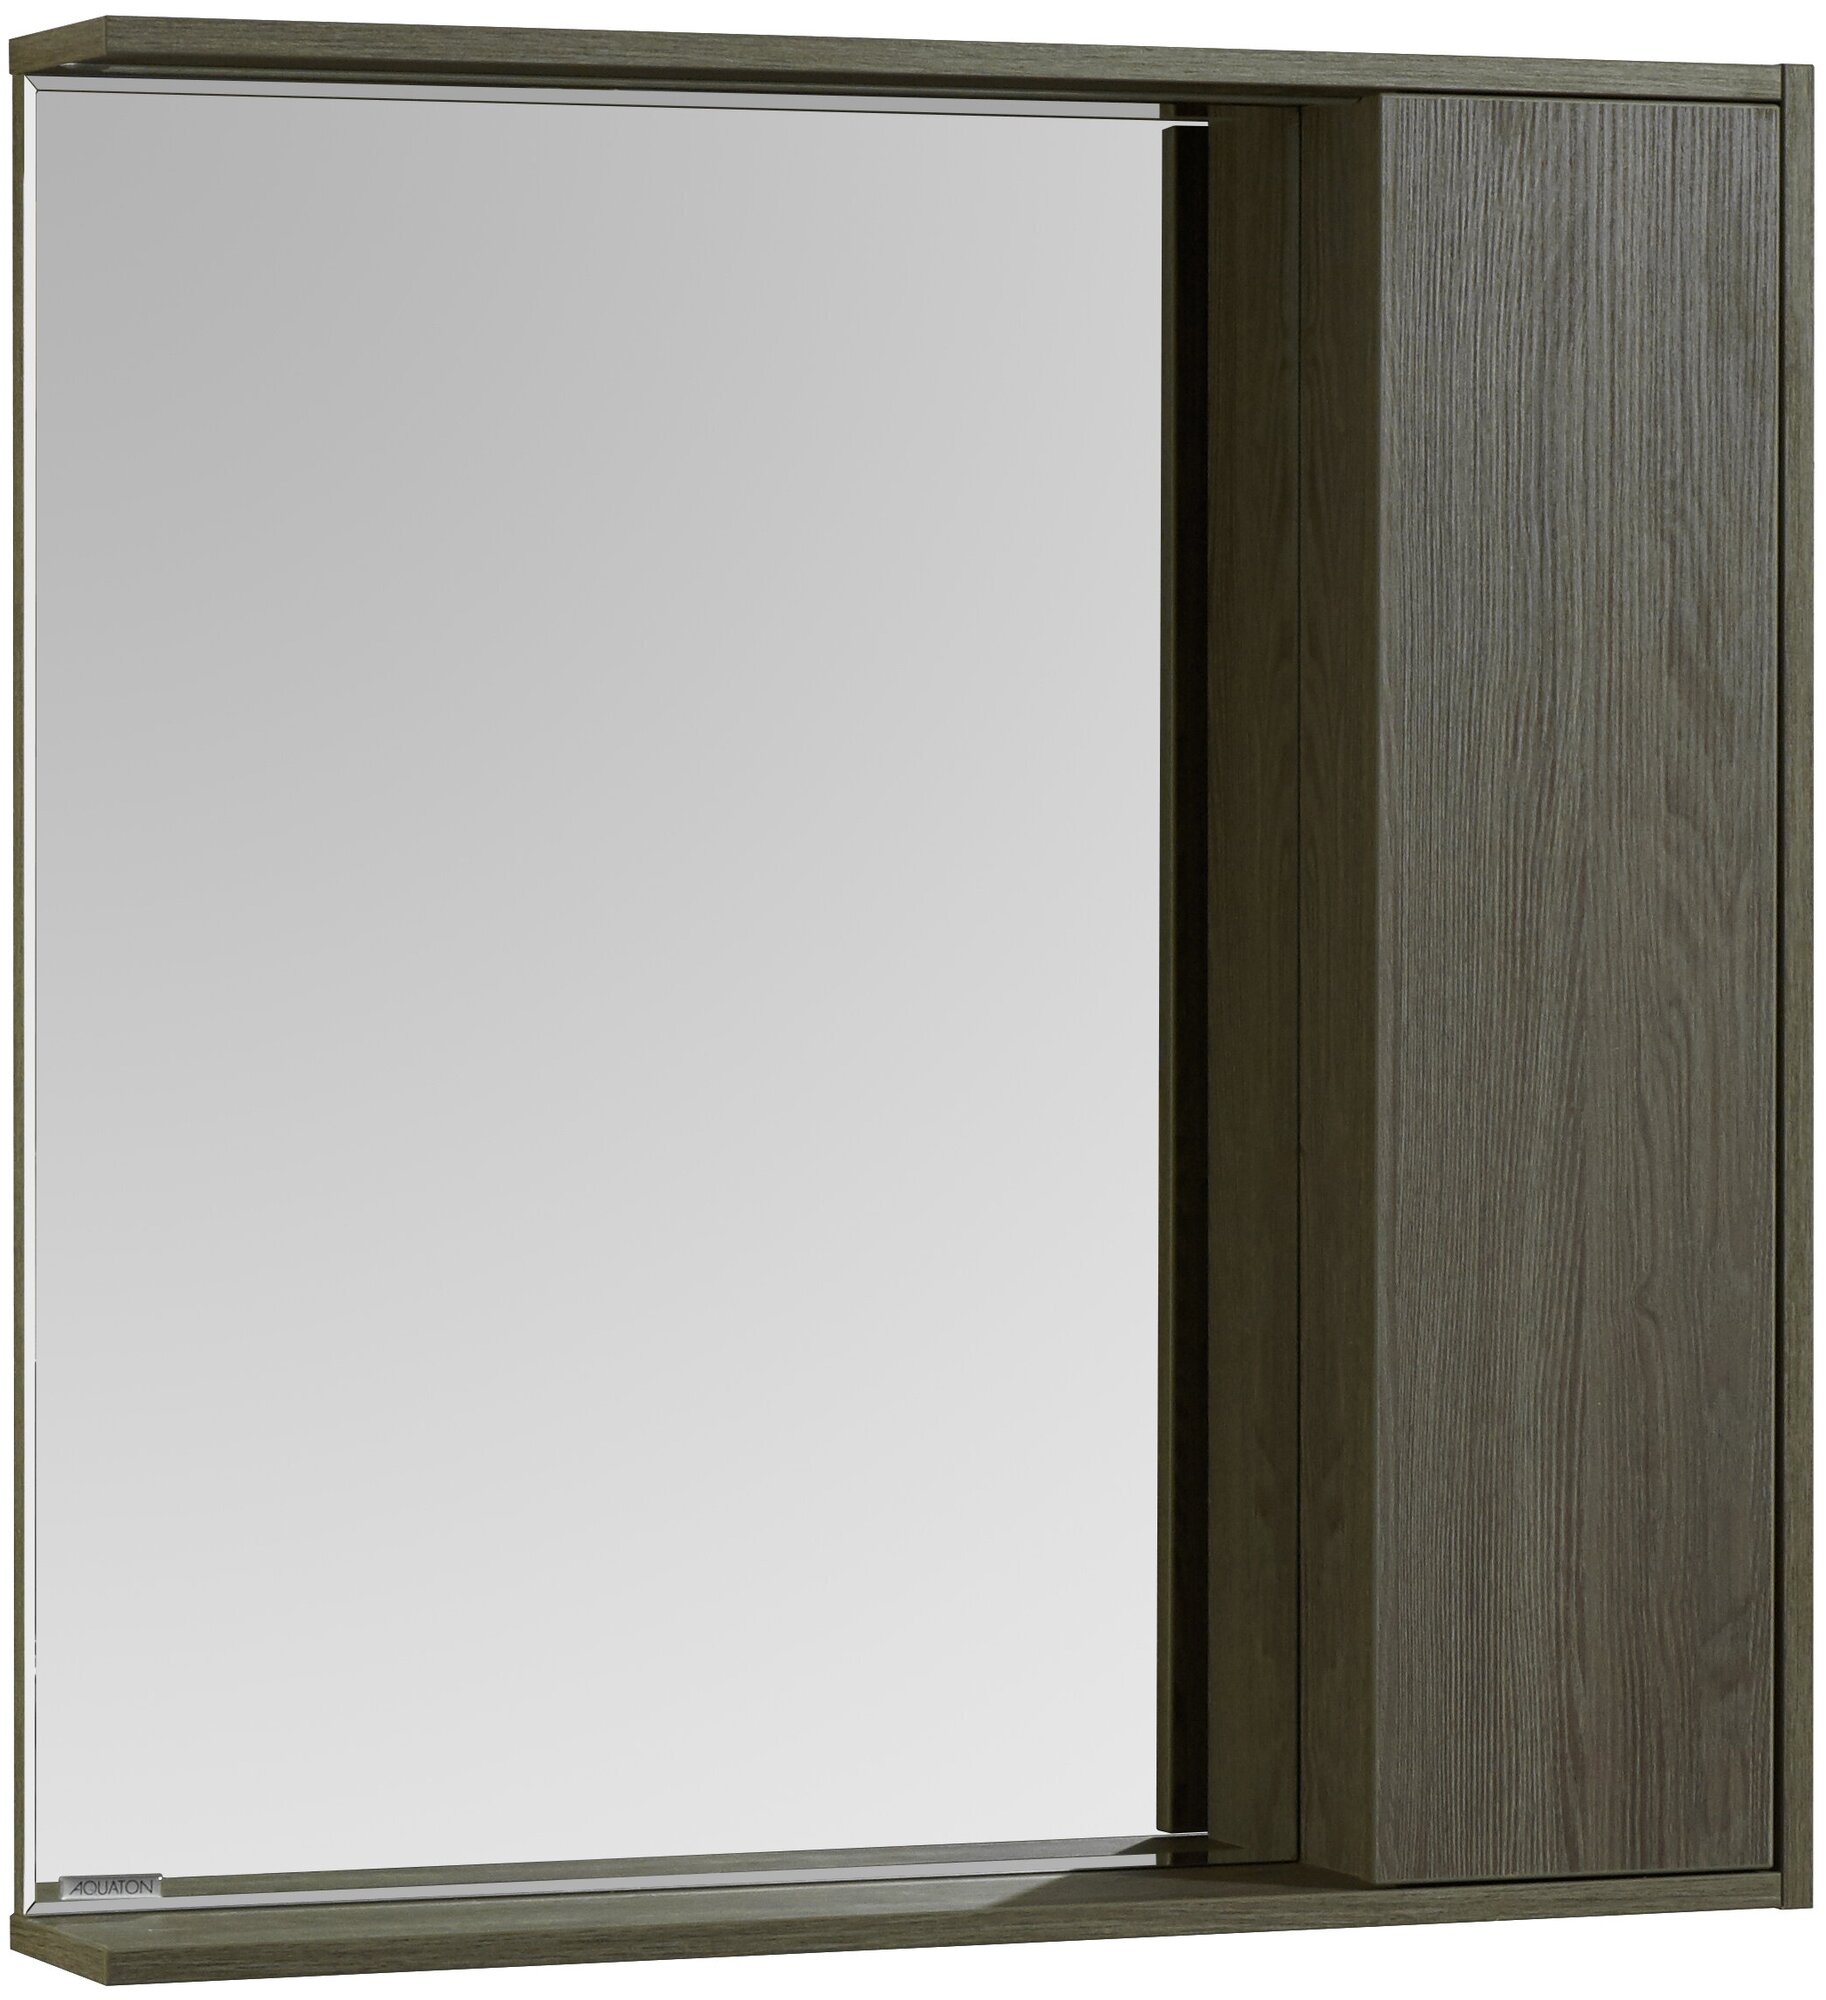 Зеркало со шкафом Акватон Стоун 80 R 1A228302SXC80 с подсветкой Грецкий орех